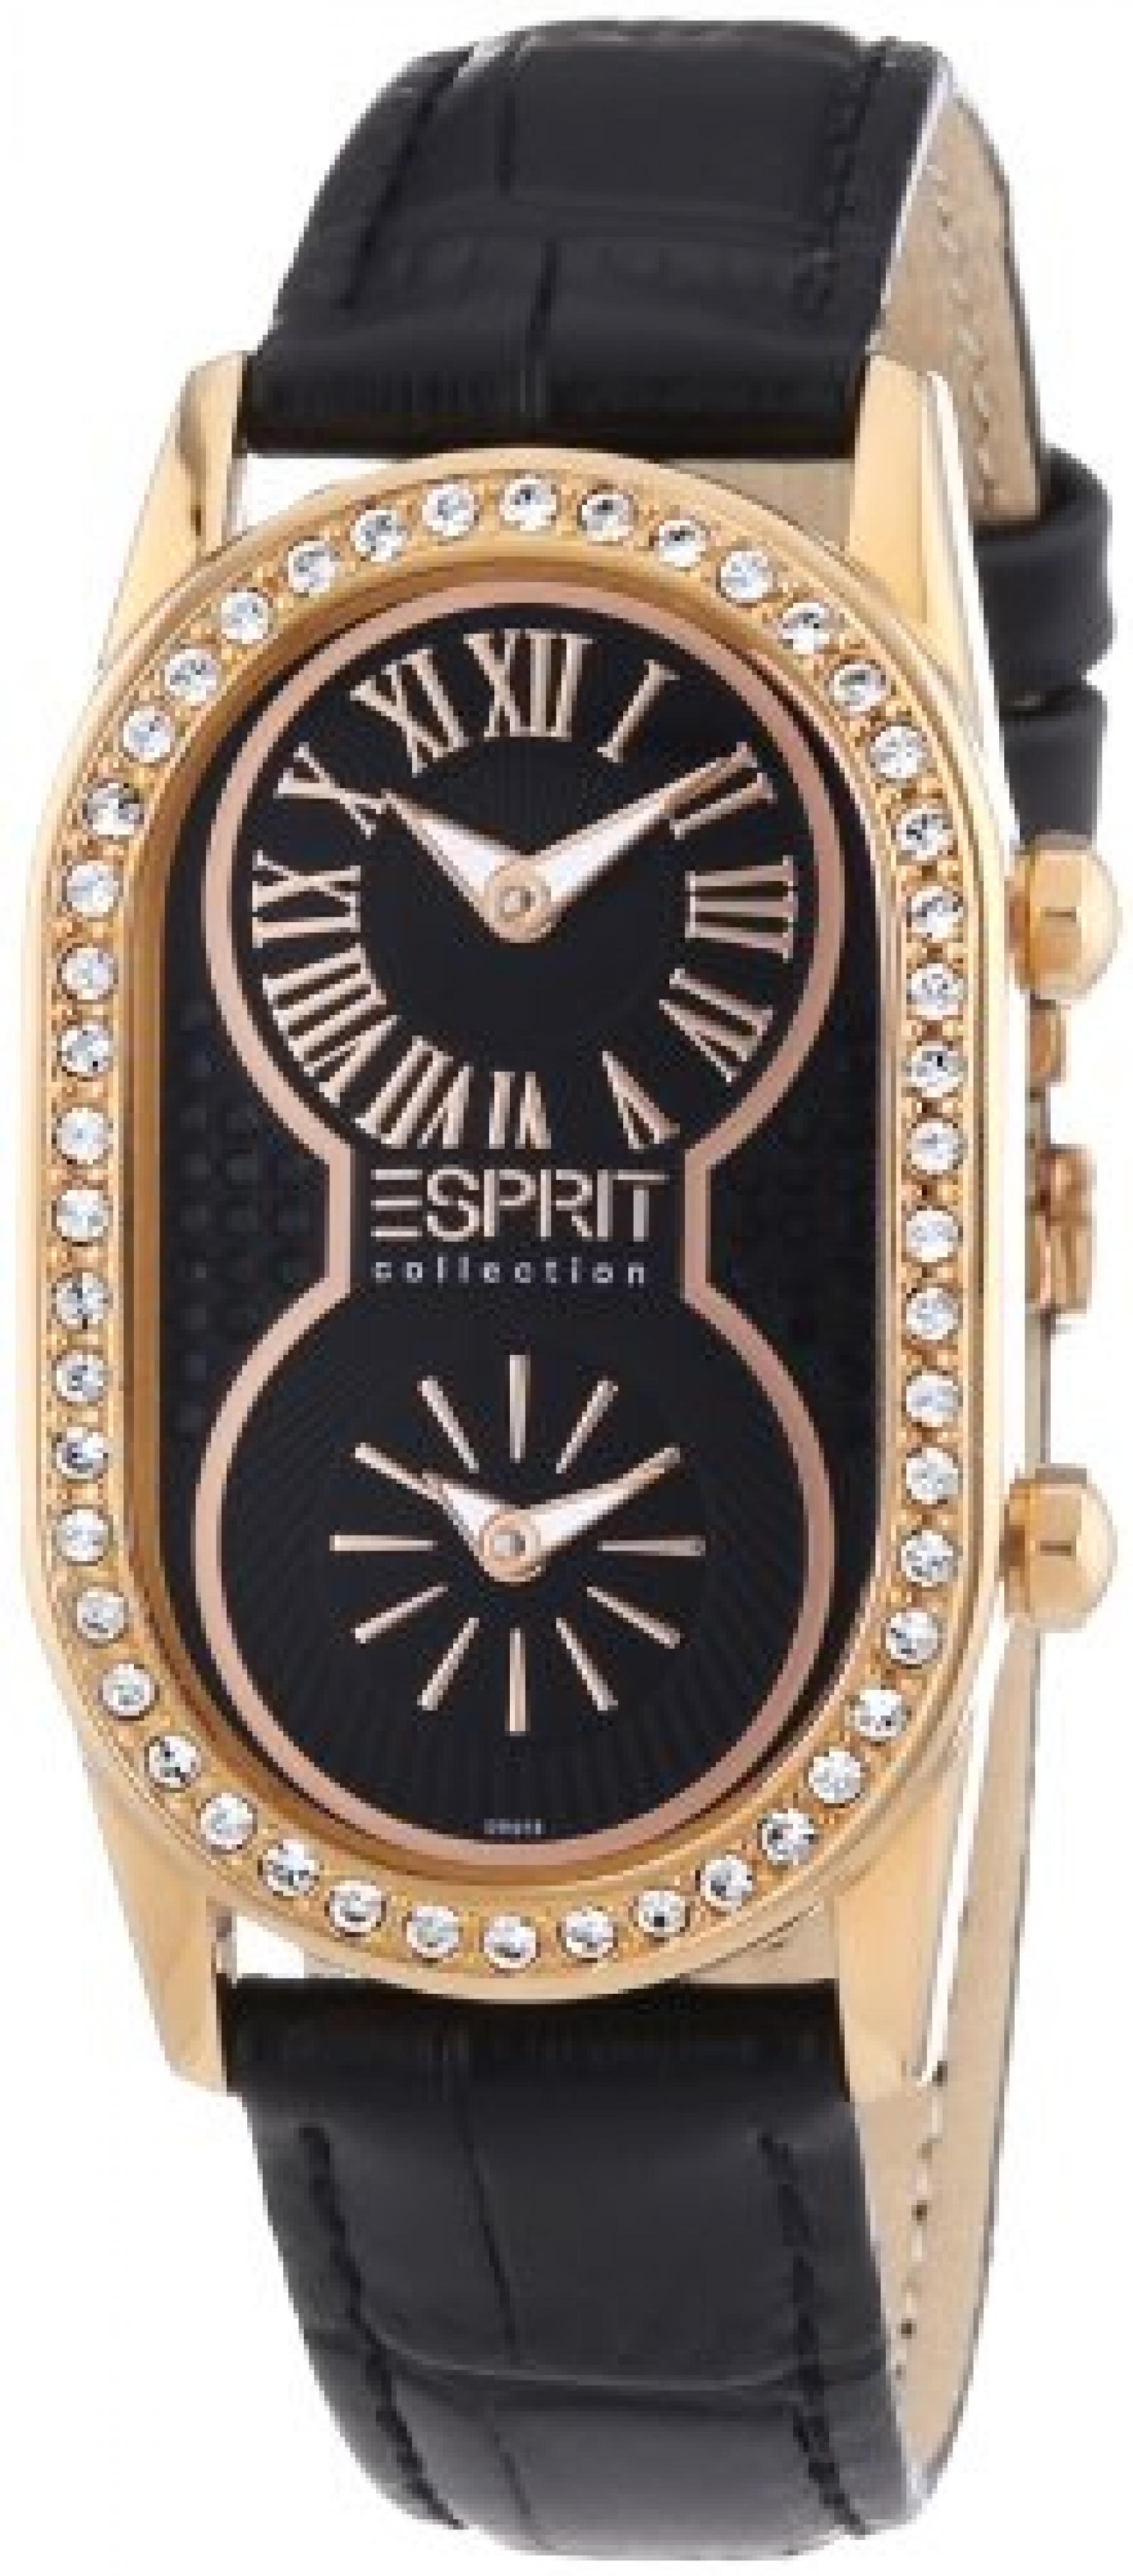 Esprit Collection Damen-Armbanduhr athena rosegold Analog Quarz Leder EL101192F07 